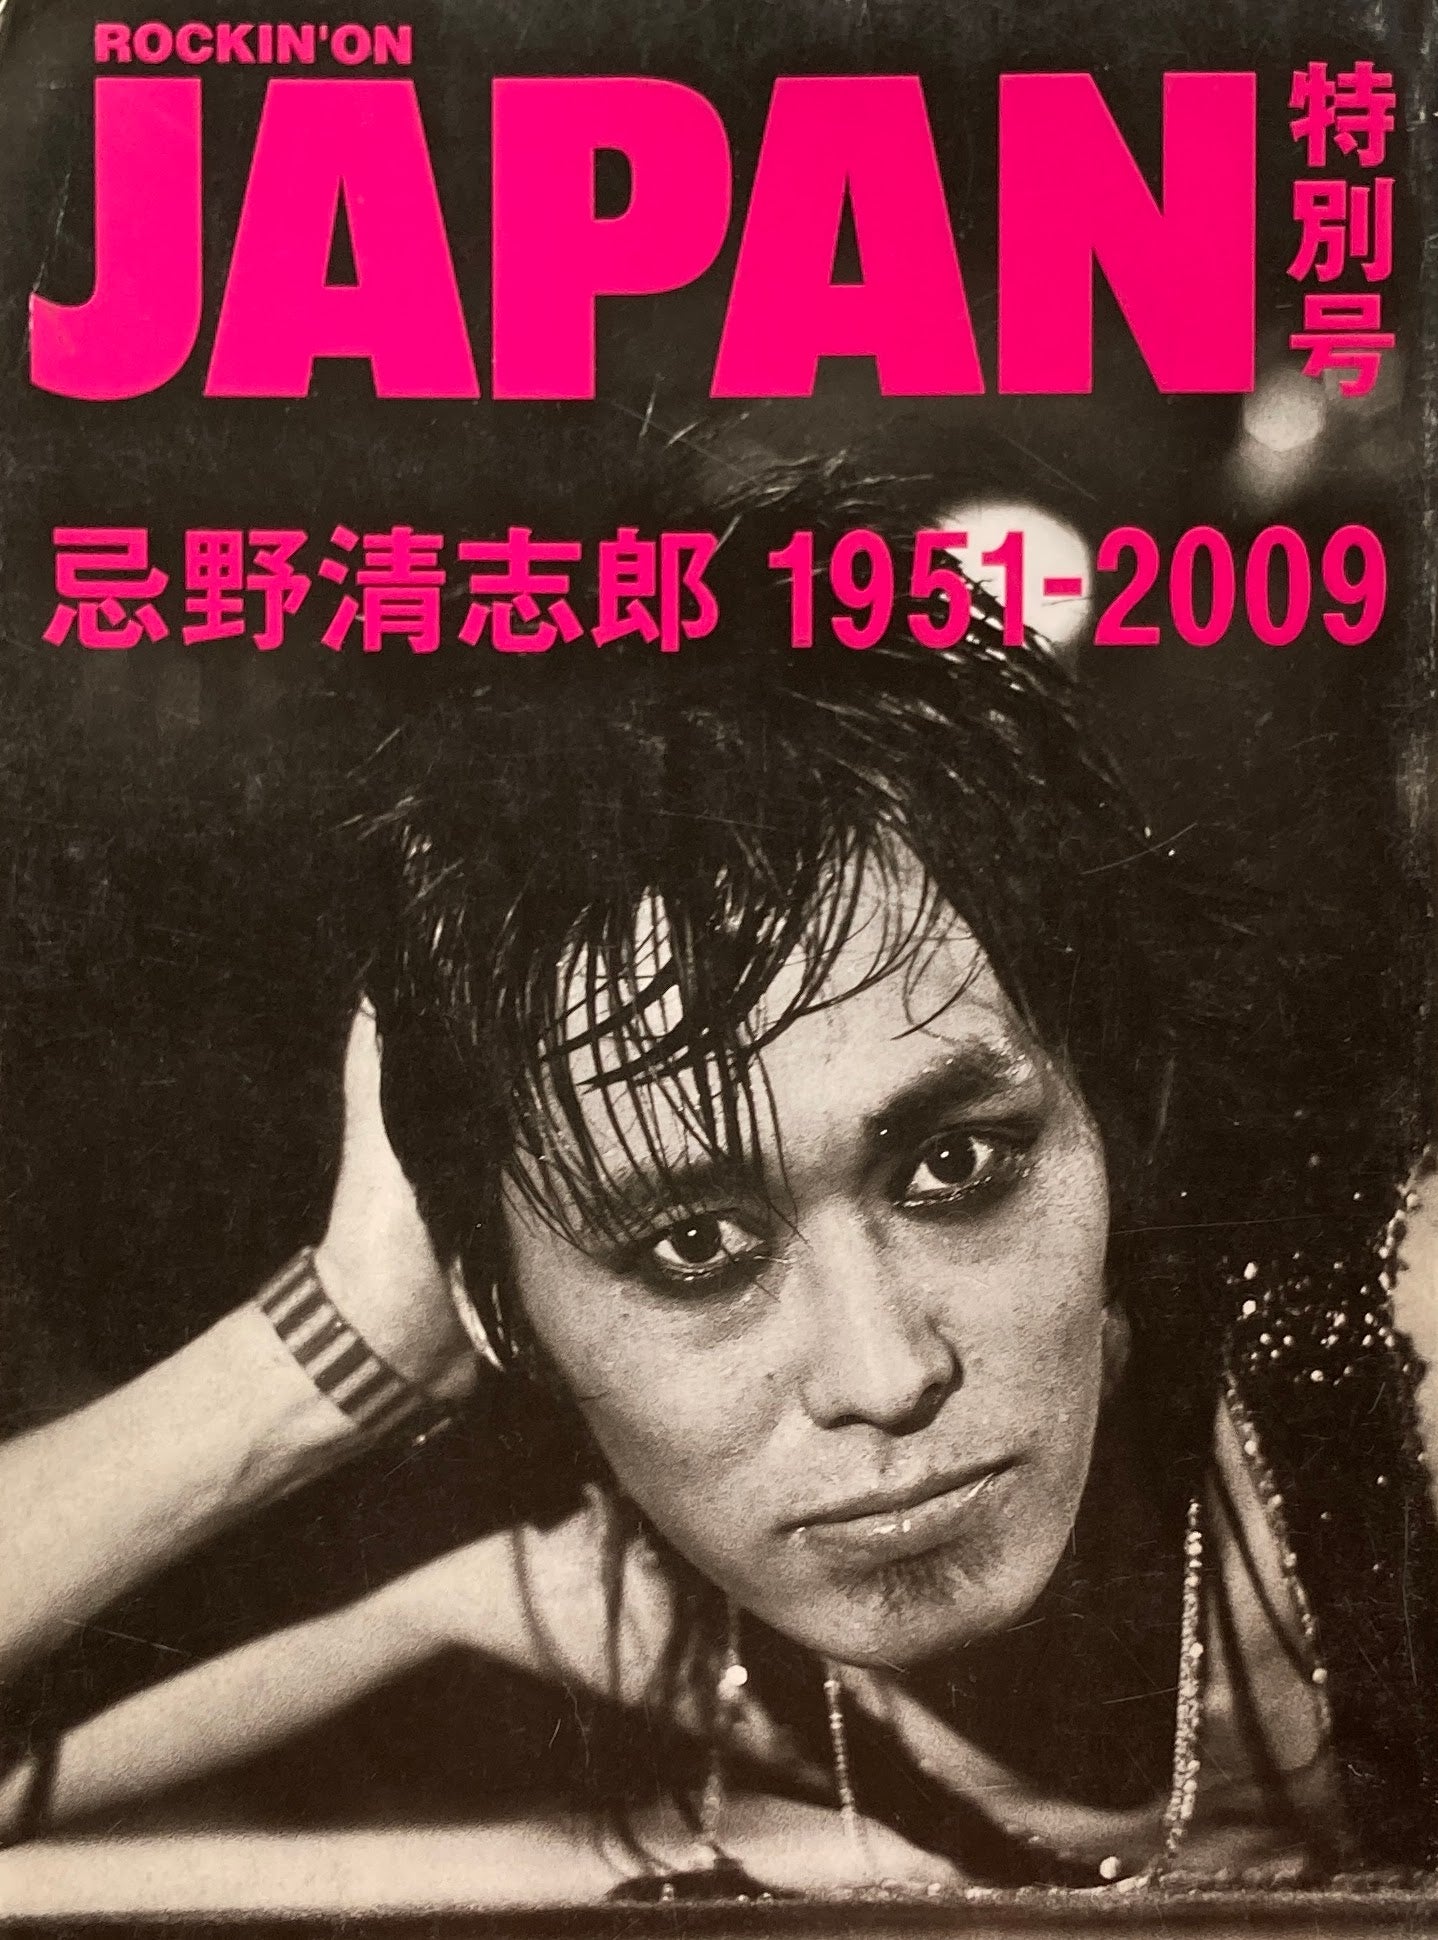 ROCKIN' ON JAPAN 特別号 忌野清志郎1951-2009 – smokebooks shop